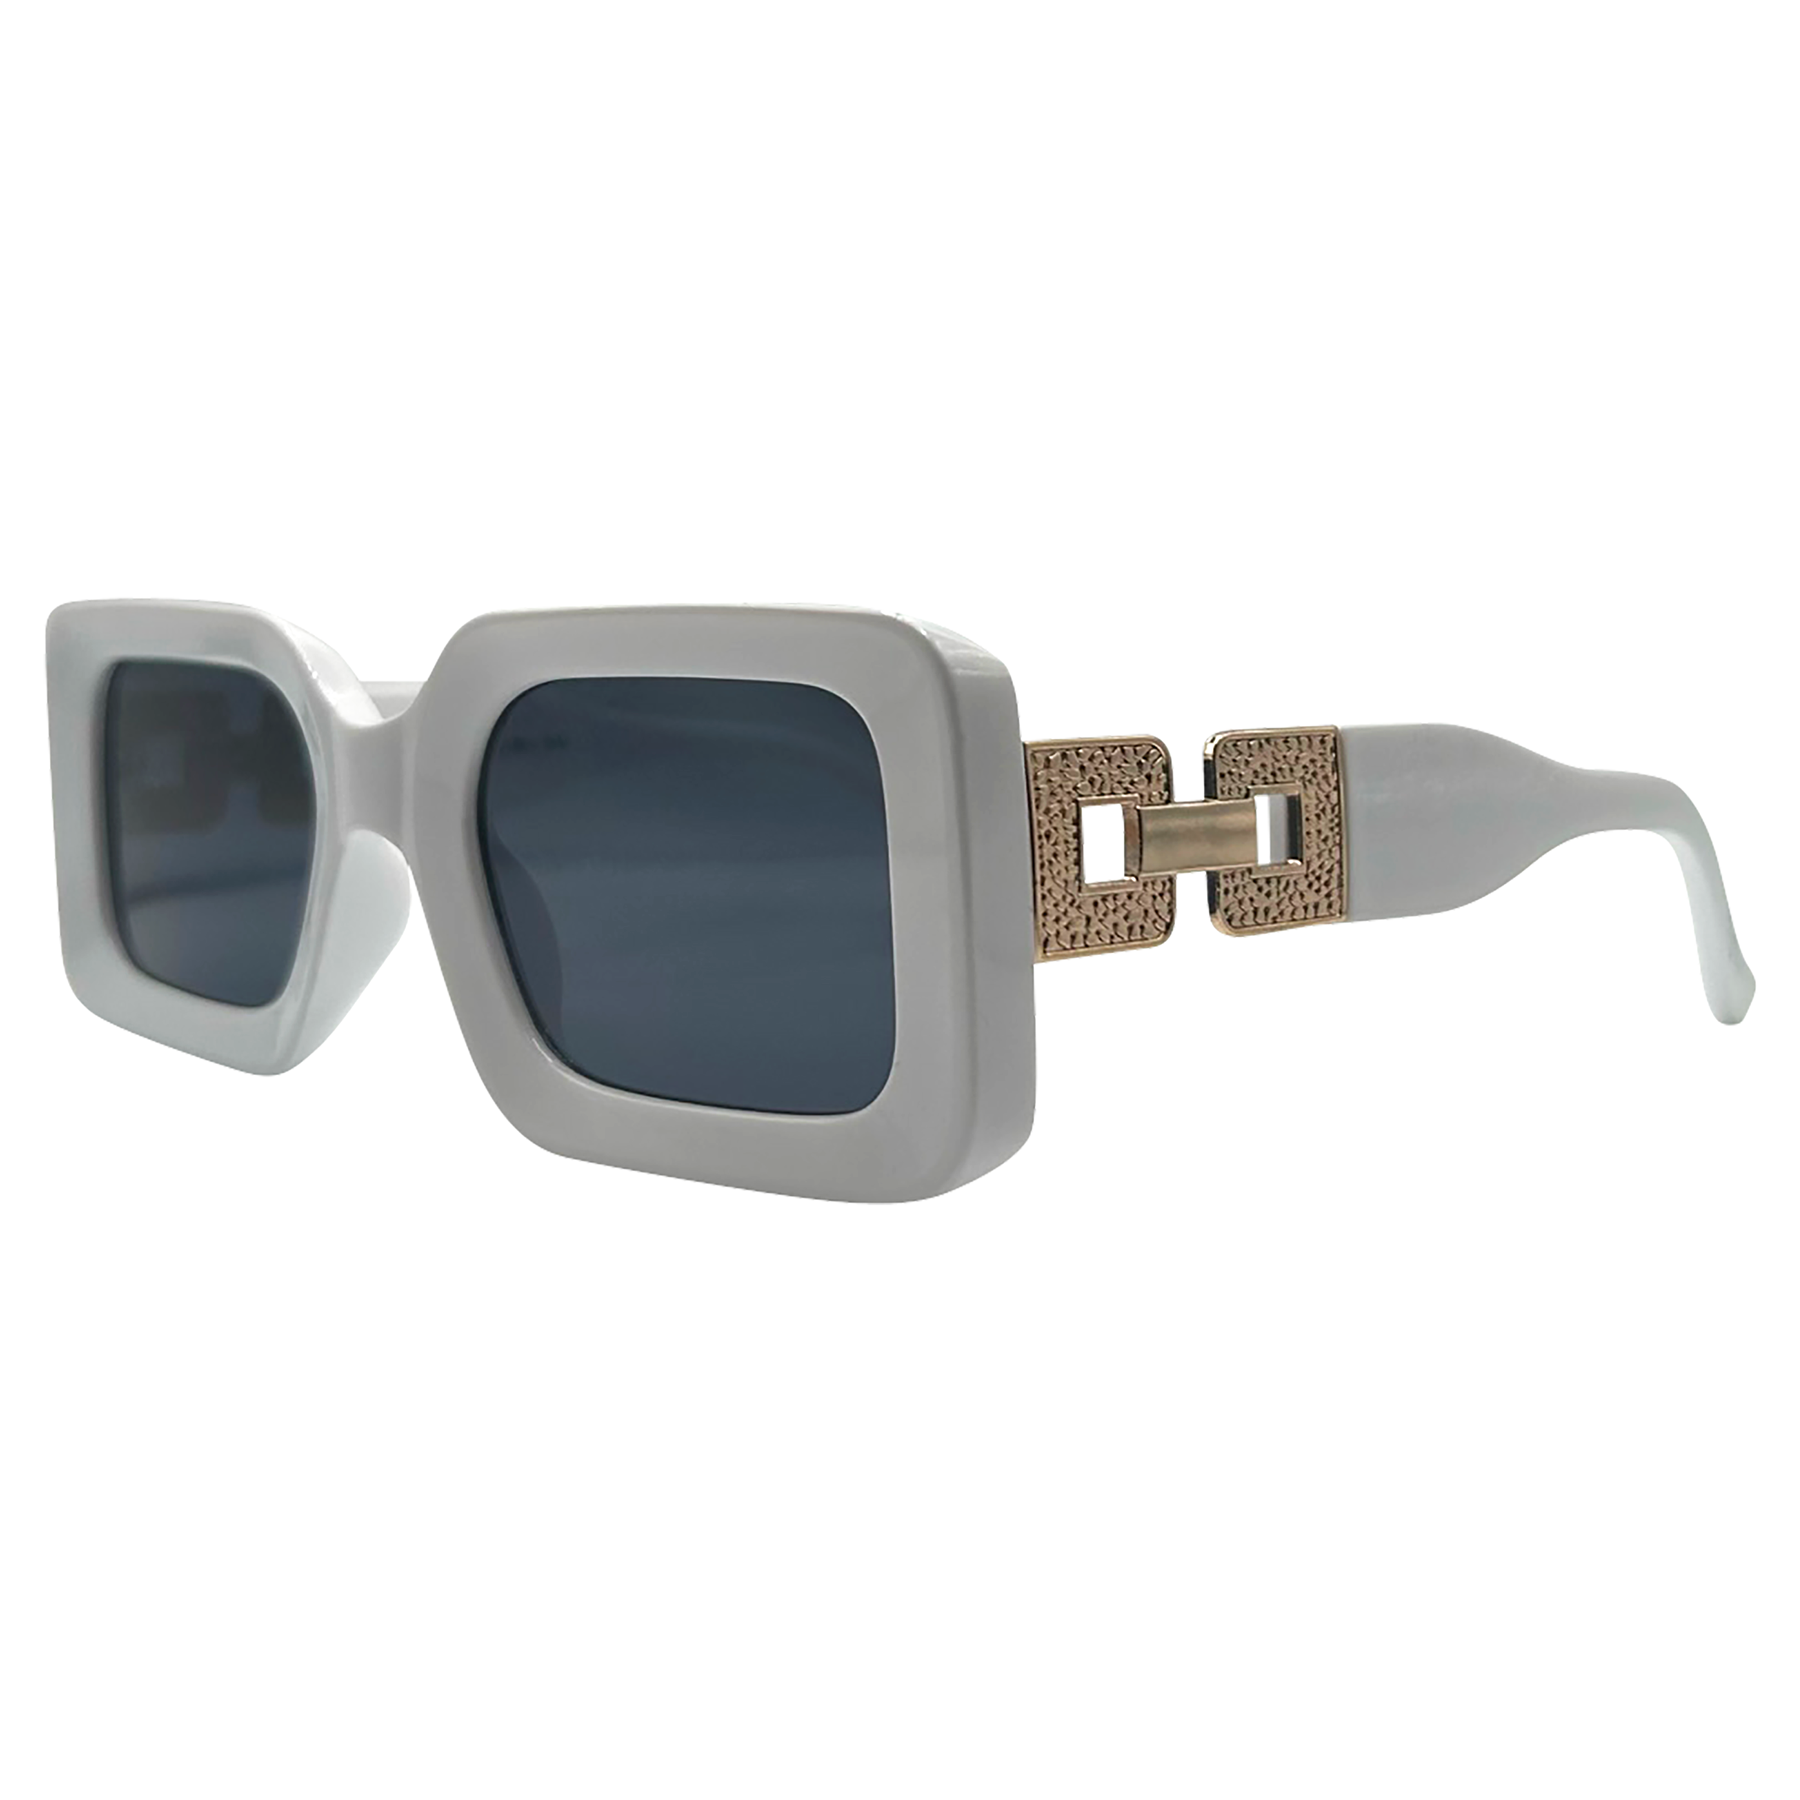 ADMIRED Square Sunglasses